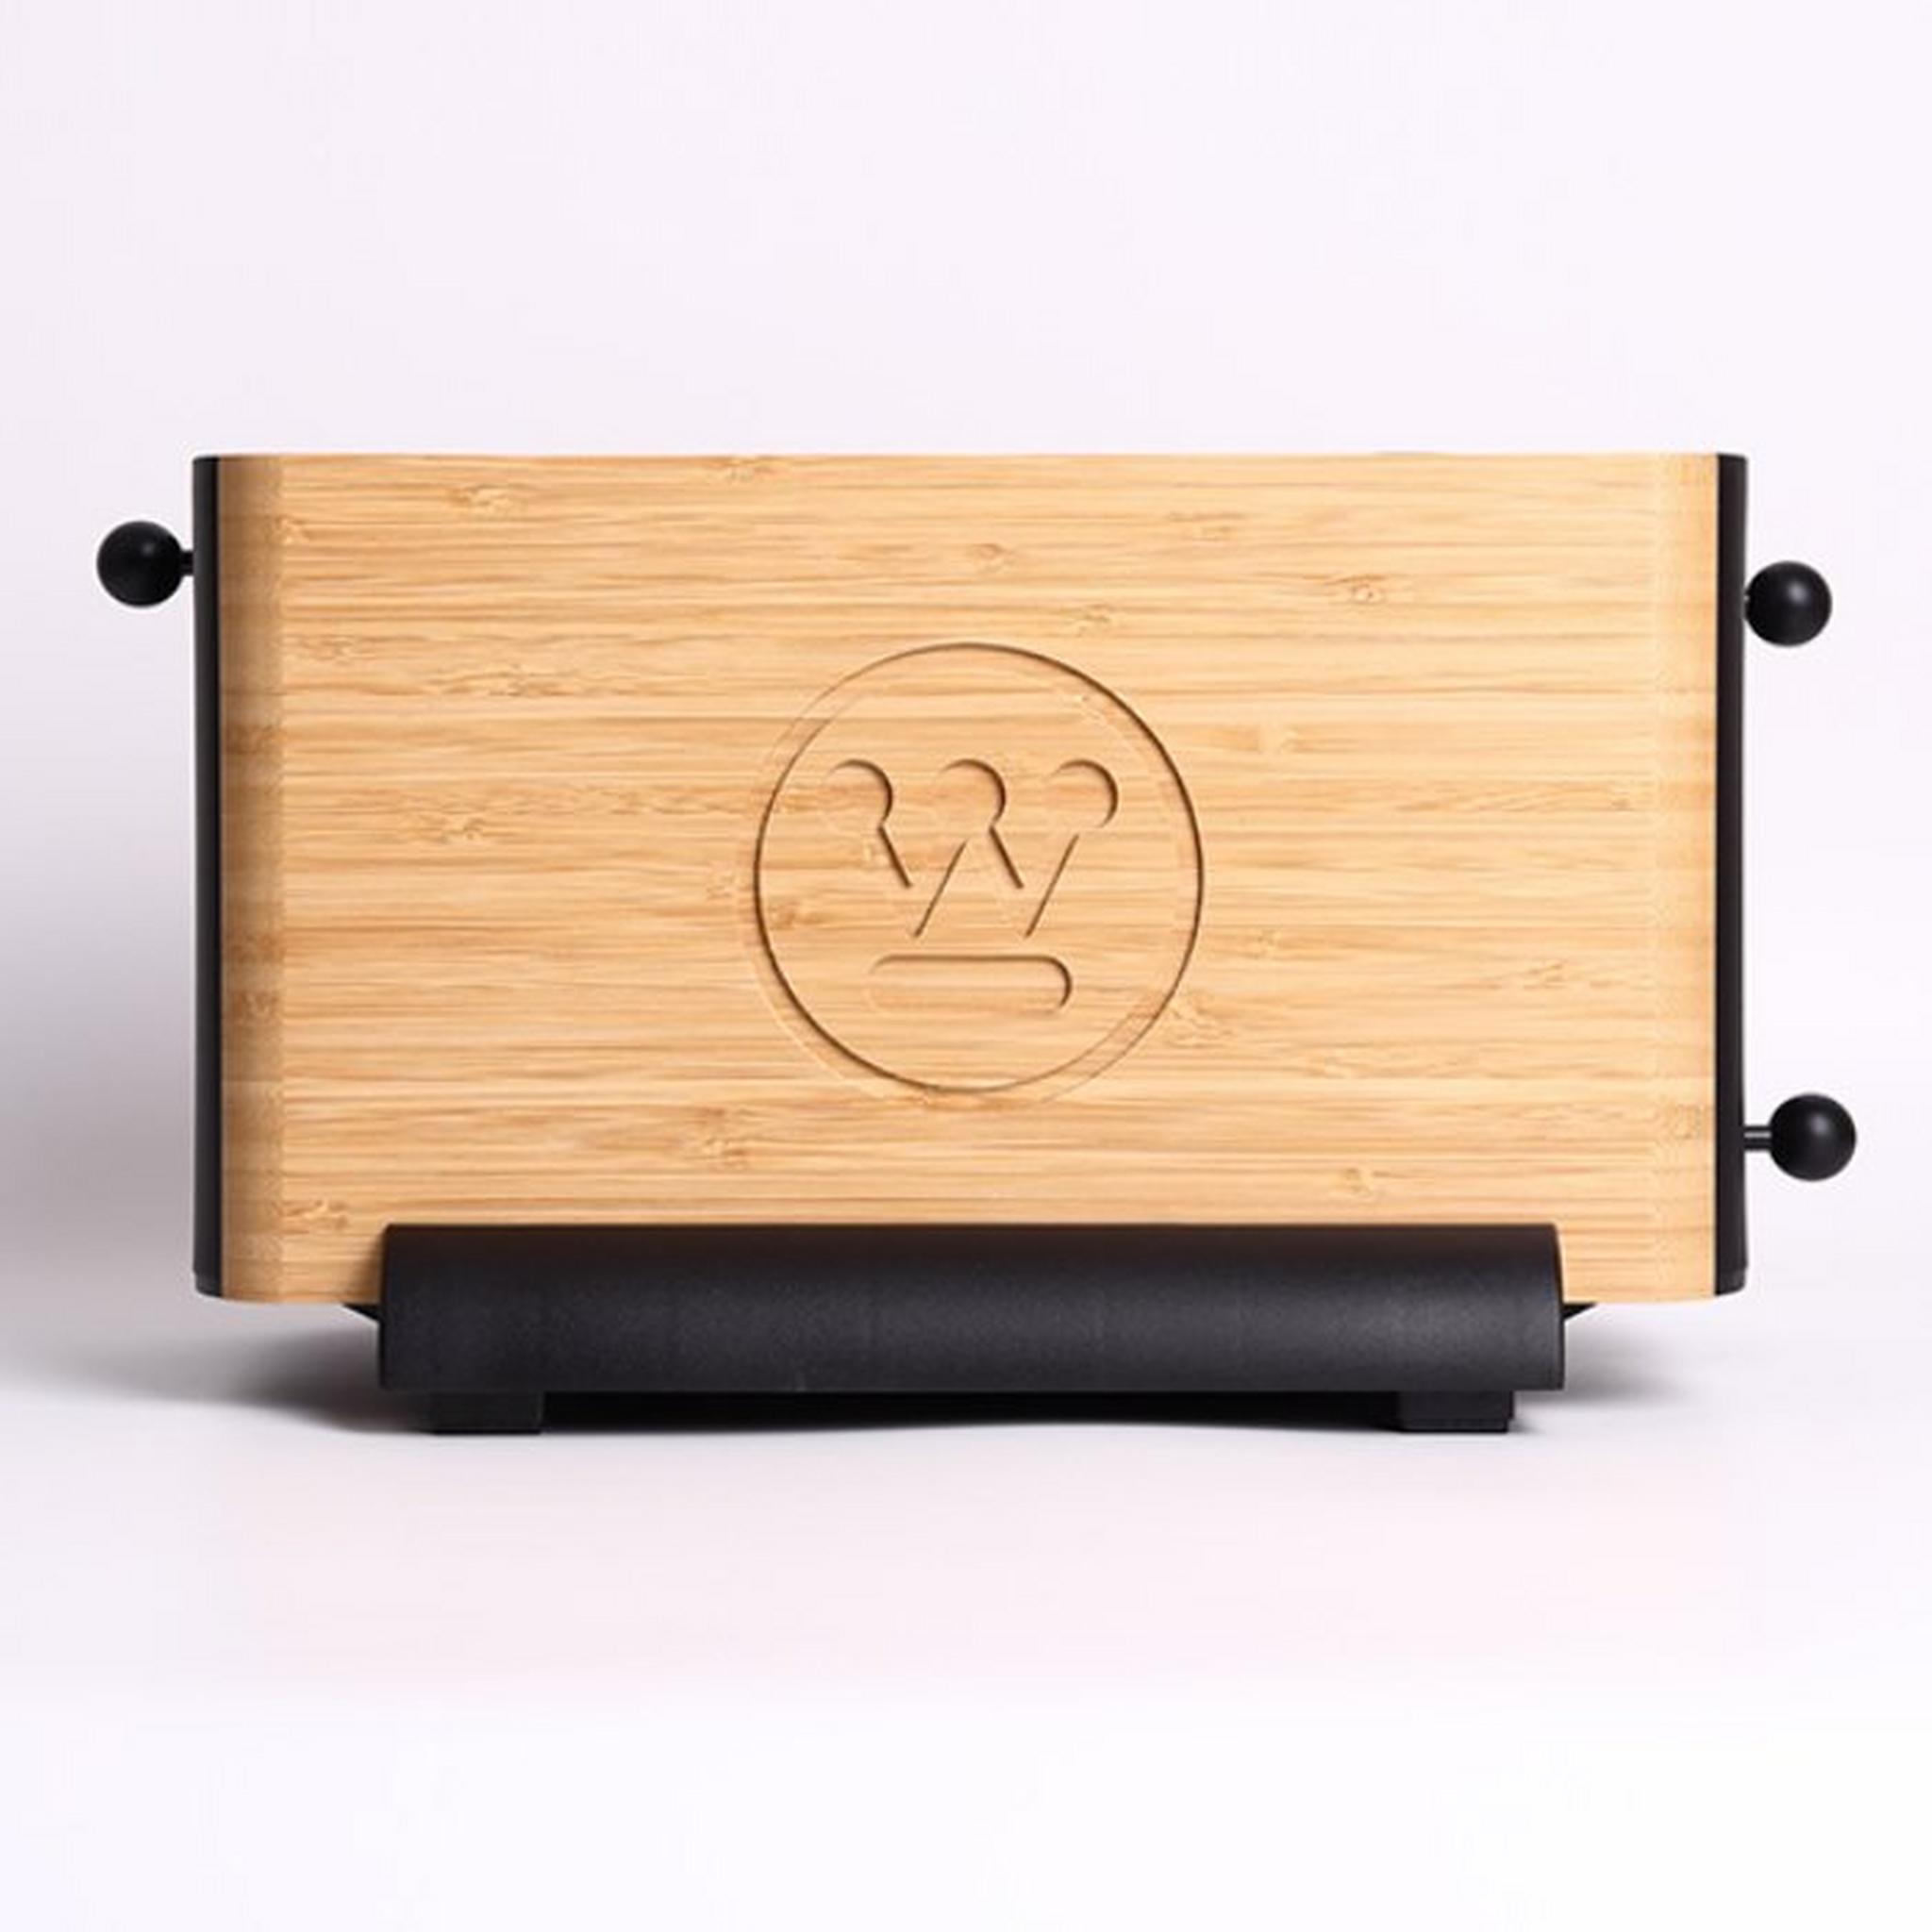 WestingHouse Toaster, 1400W, 2 slices, WKTTF04BB – Black